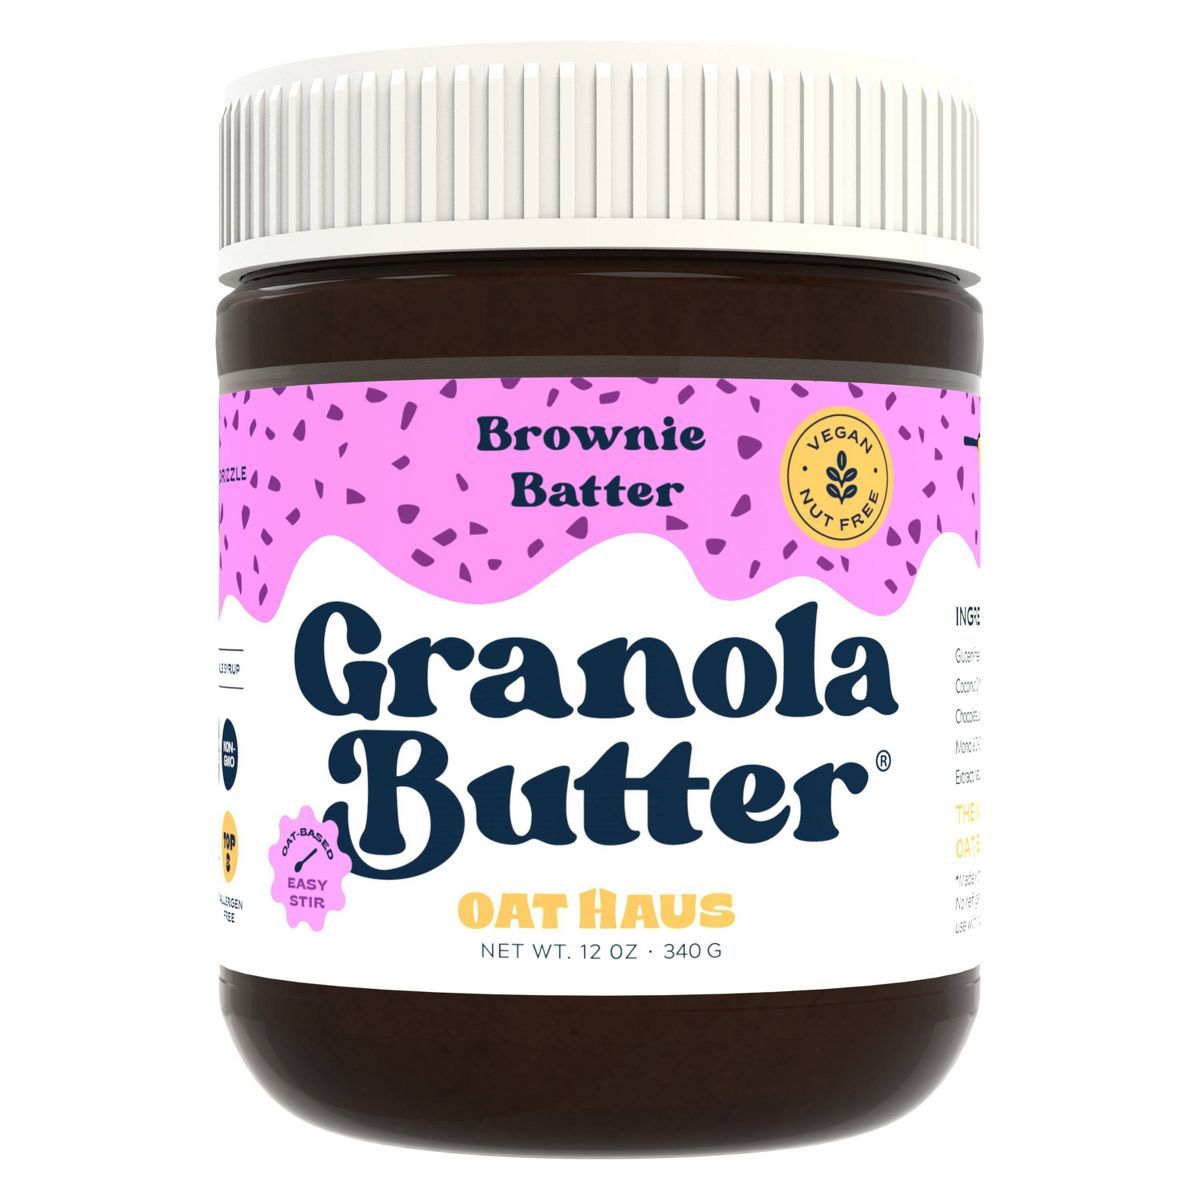 Oat Haus Brownie Batter Granola Butter - 12oz | Target